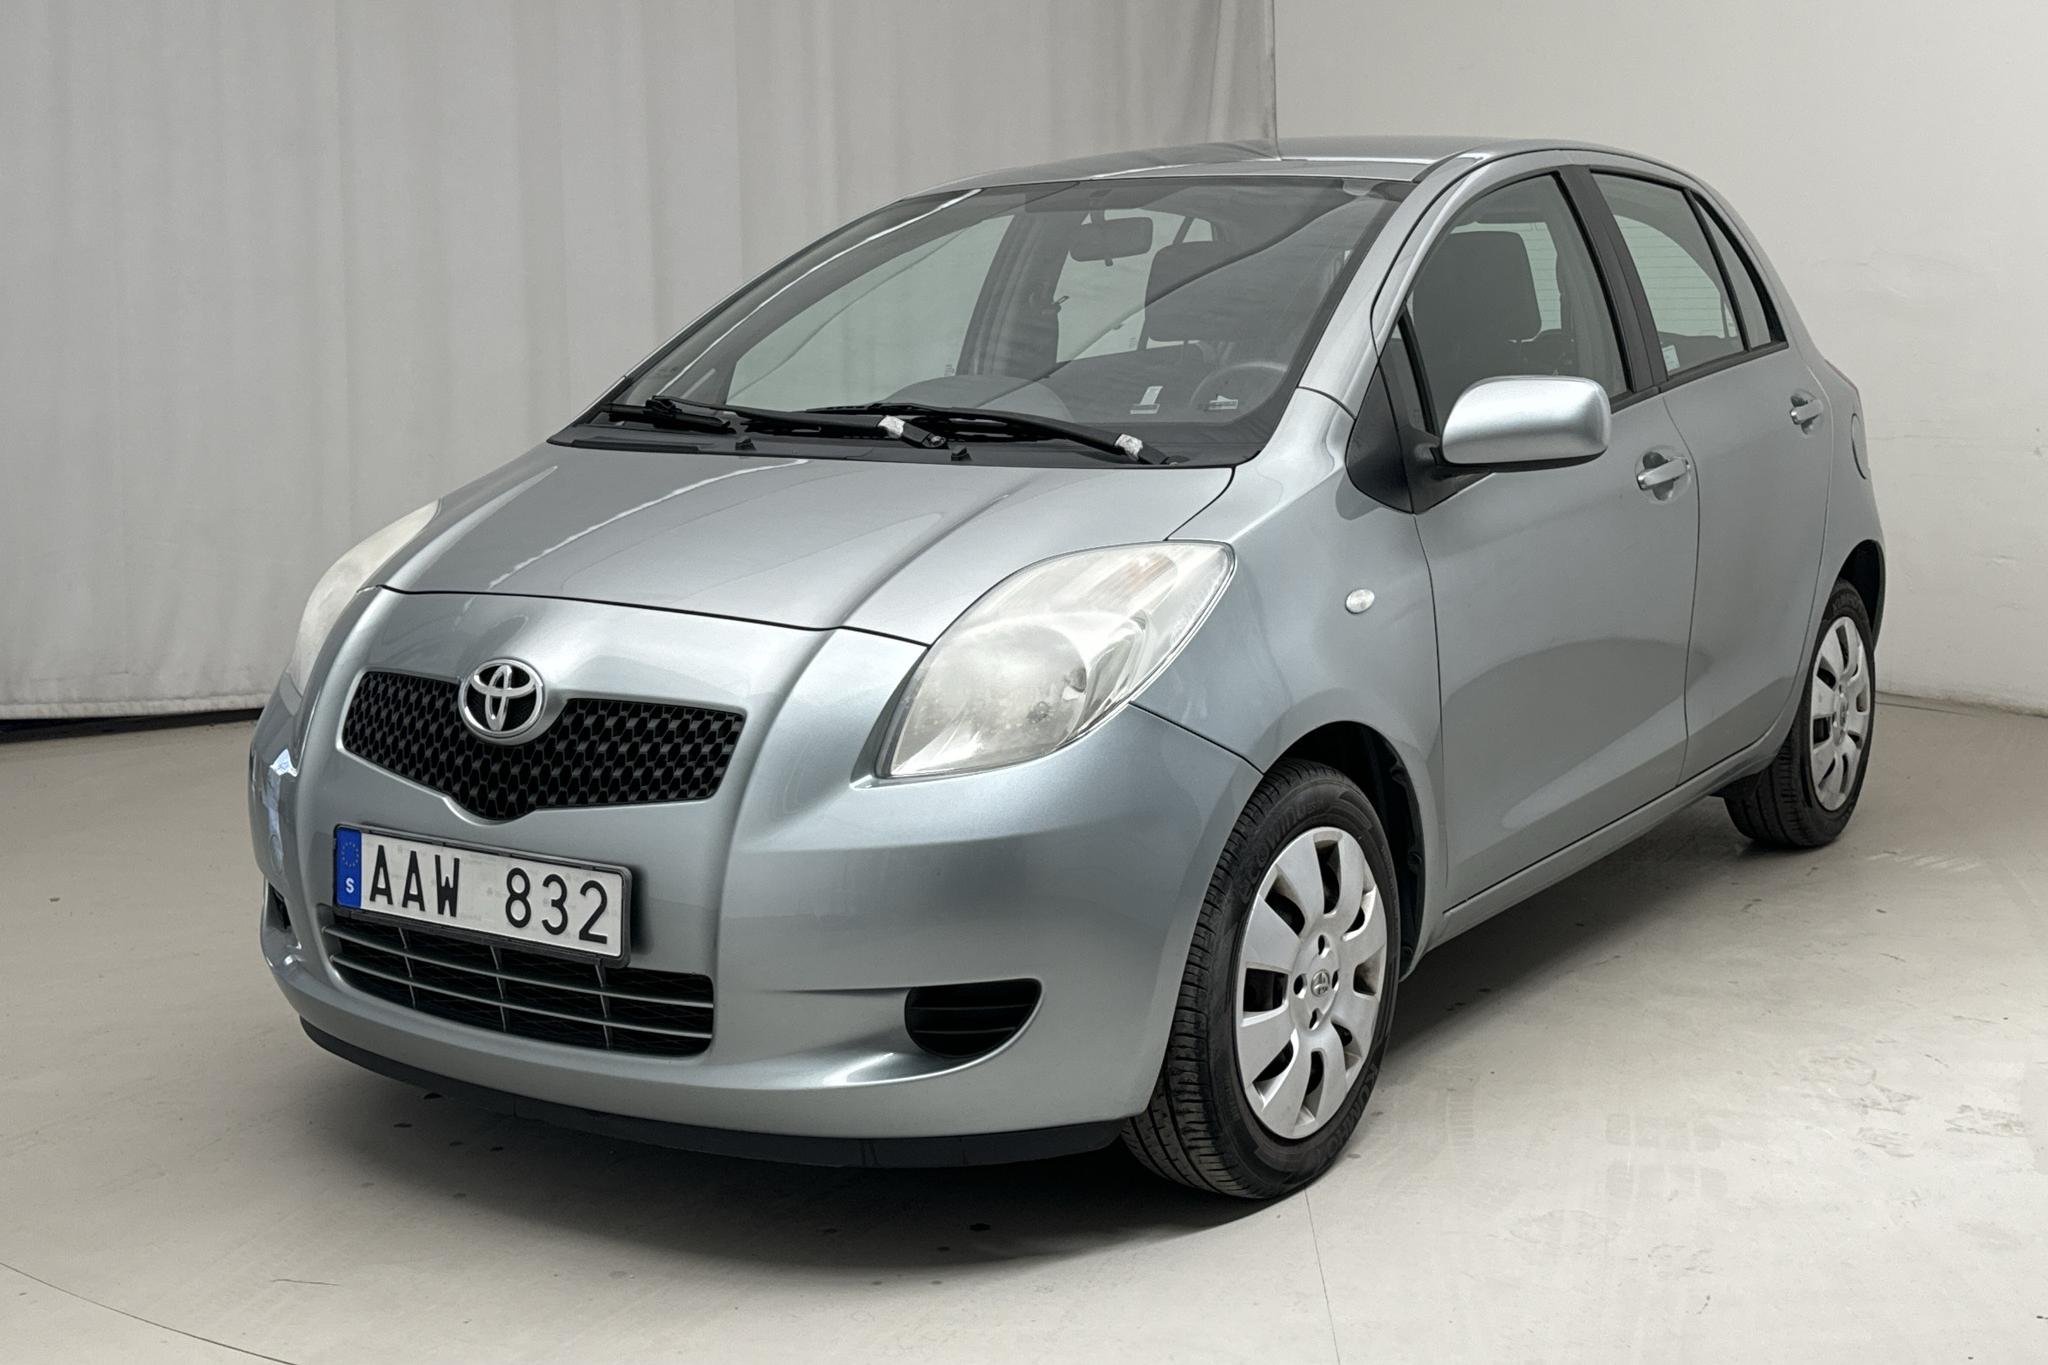 Toyota Yaris 1.3 5dr (87hk) - 149 080 km - Manual - gray - 2007